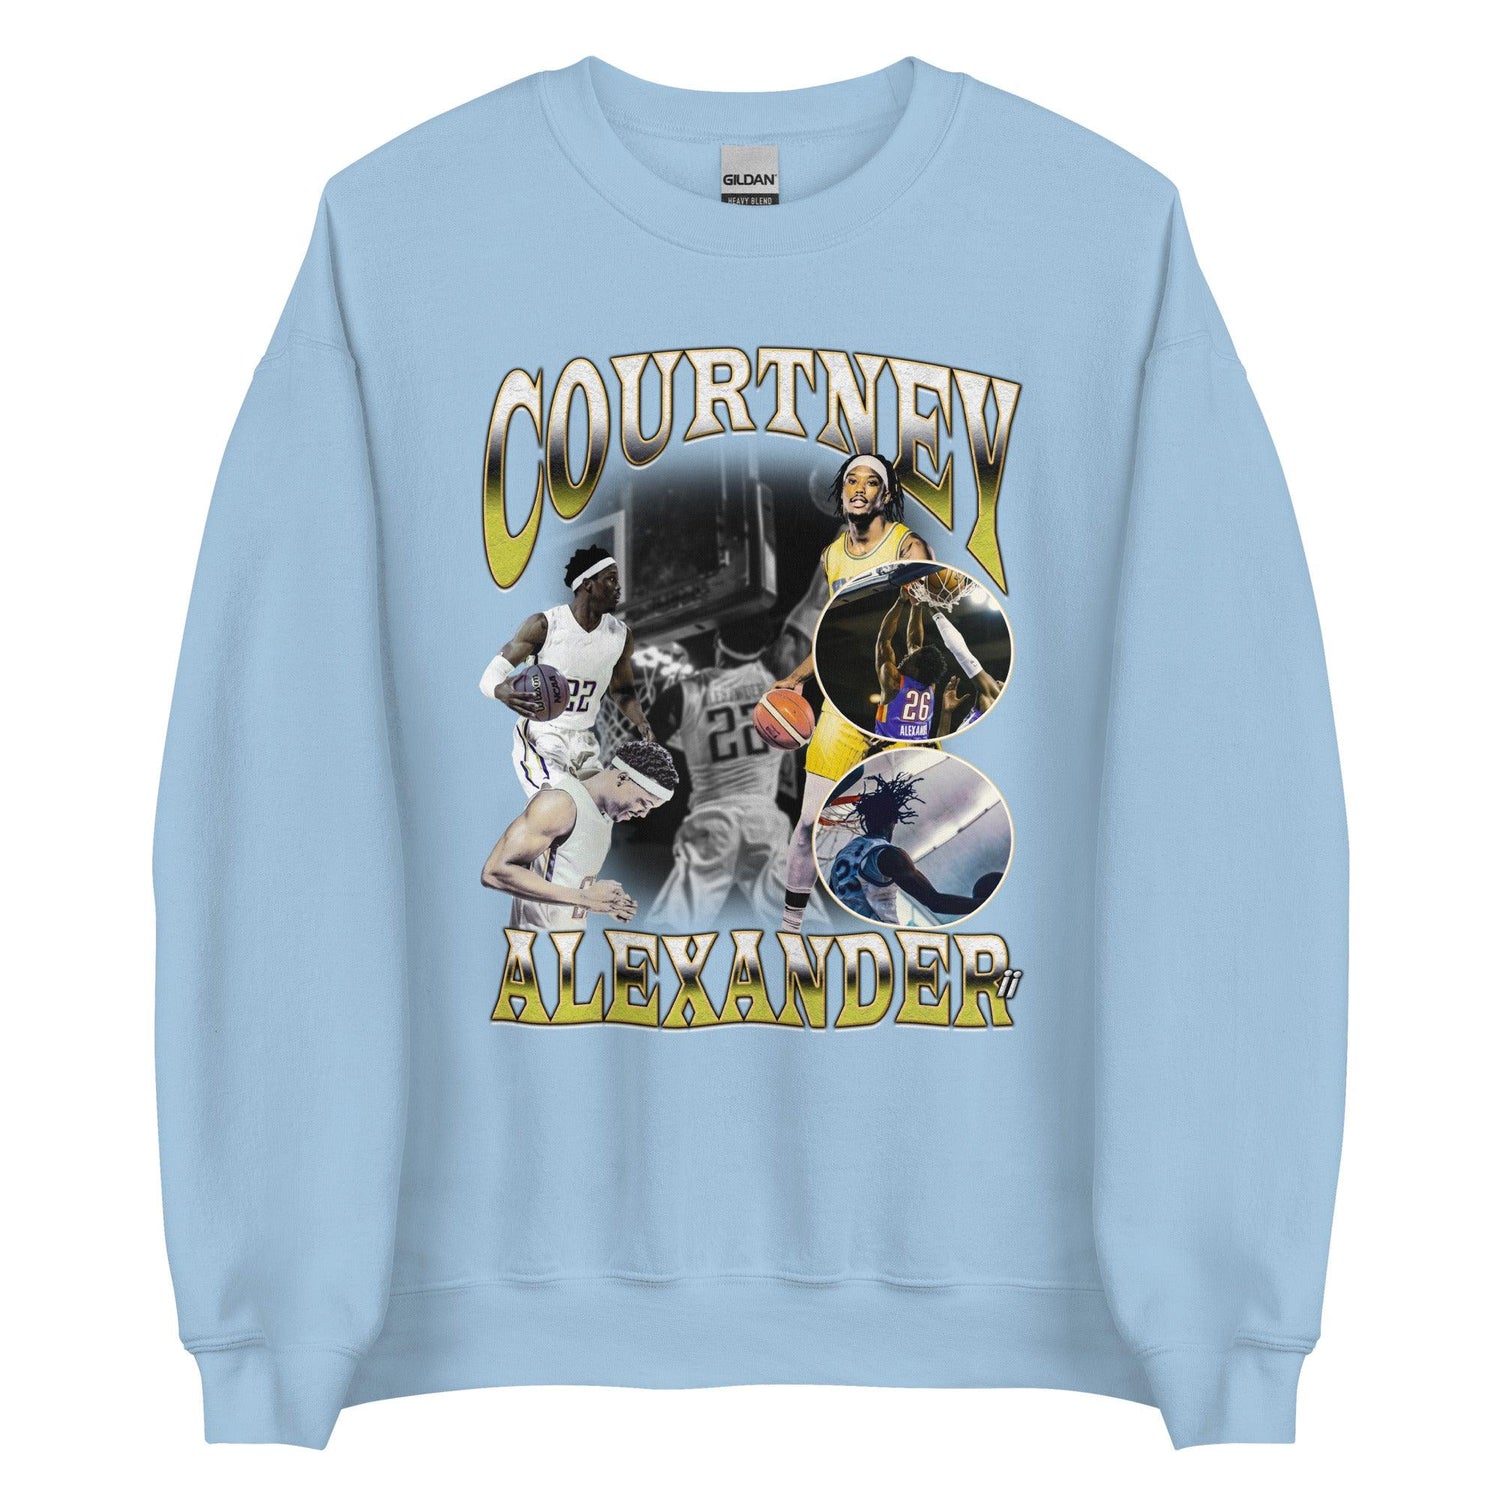 Courtney Alexander "Vintage" Sweatshirt - Fan Arch